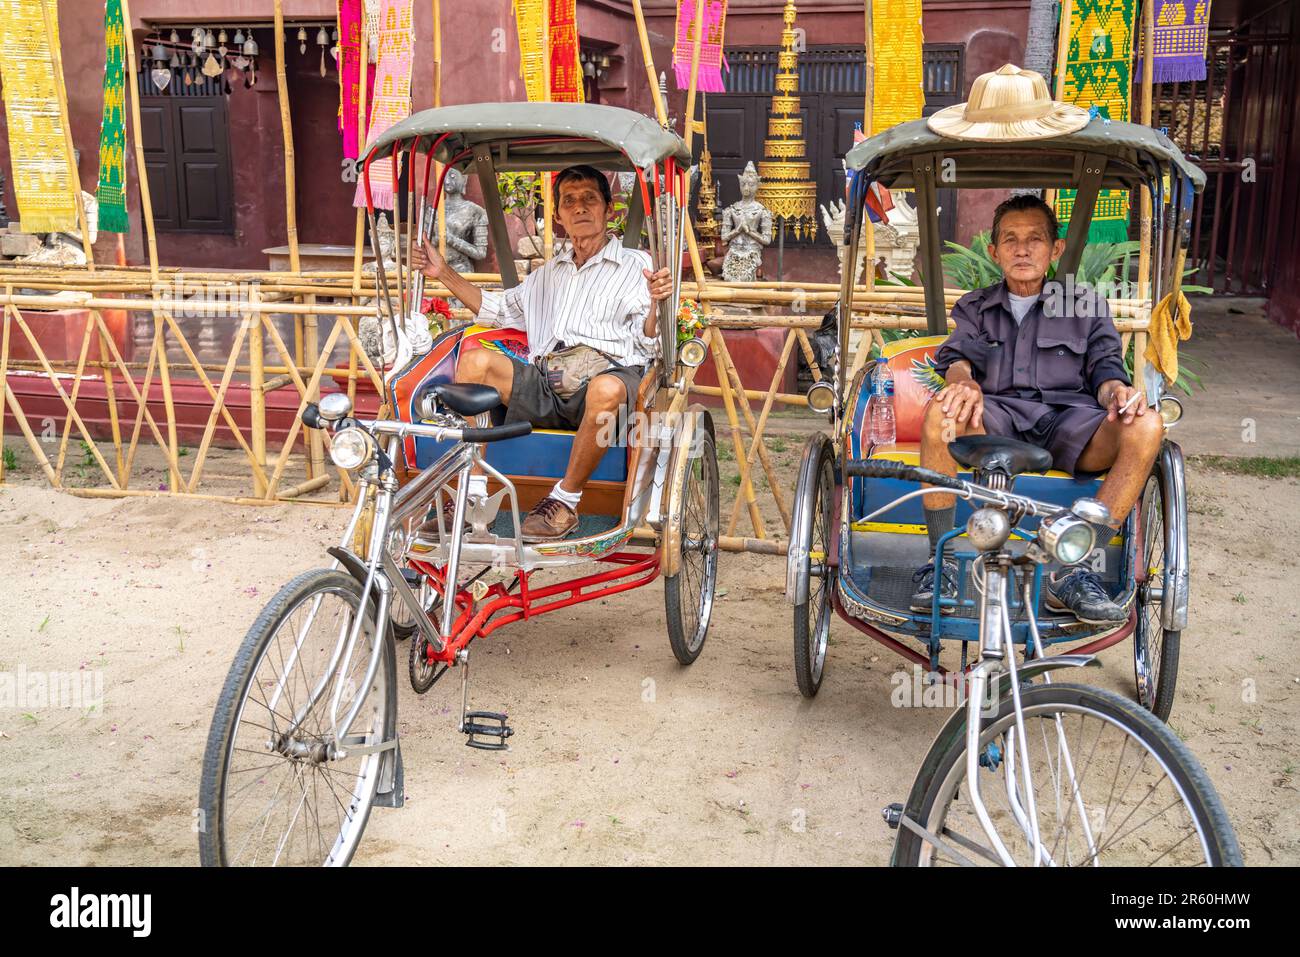 Fahrrad Rikscha Fahrer warten auf Kundschaft,  Chiang Mai, Thailand, Asien   |   cycle rickshaw drivers waiting for customers, Chiang Mai, Thailand, A Stock Photo